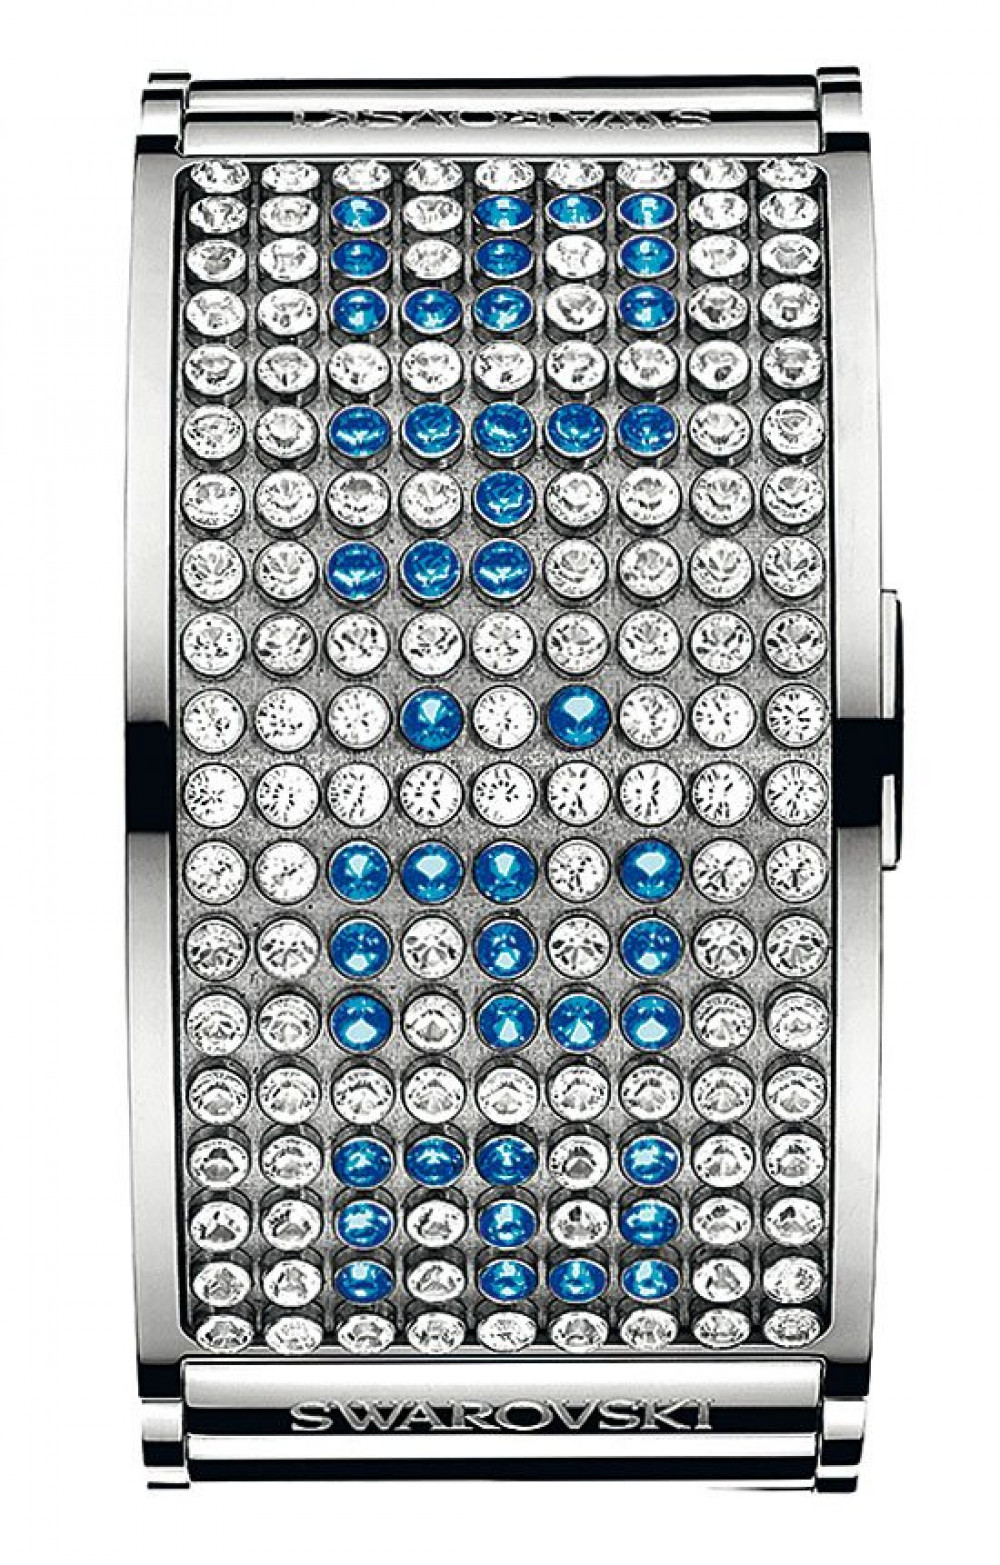 Zegarek firmy Swarovski, model D:Light